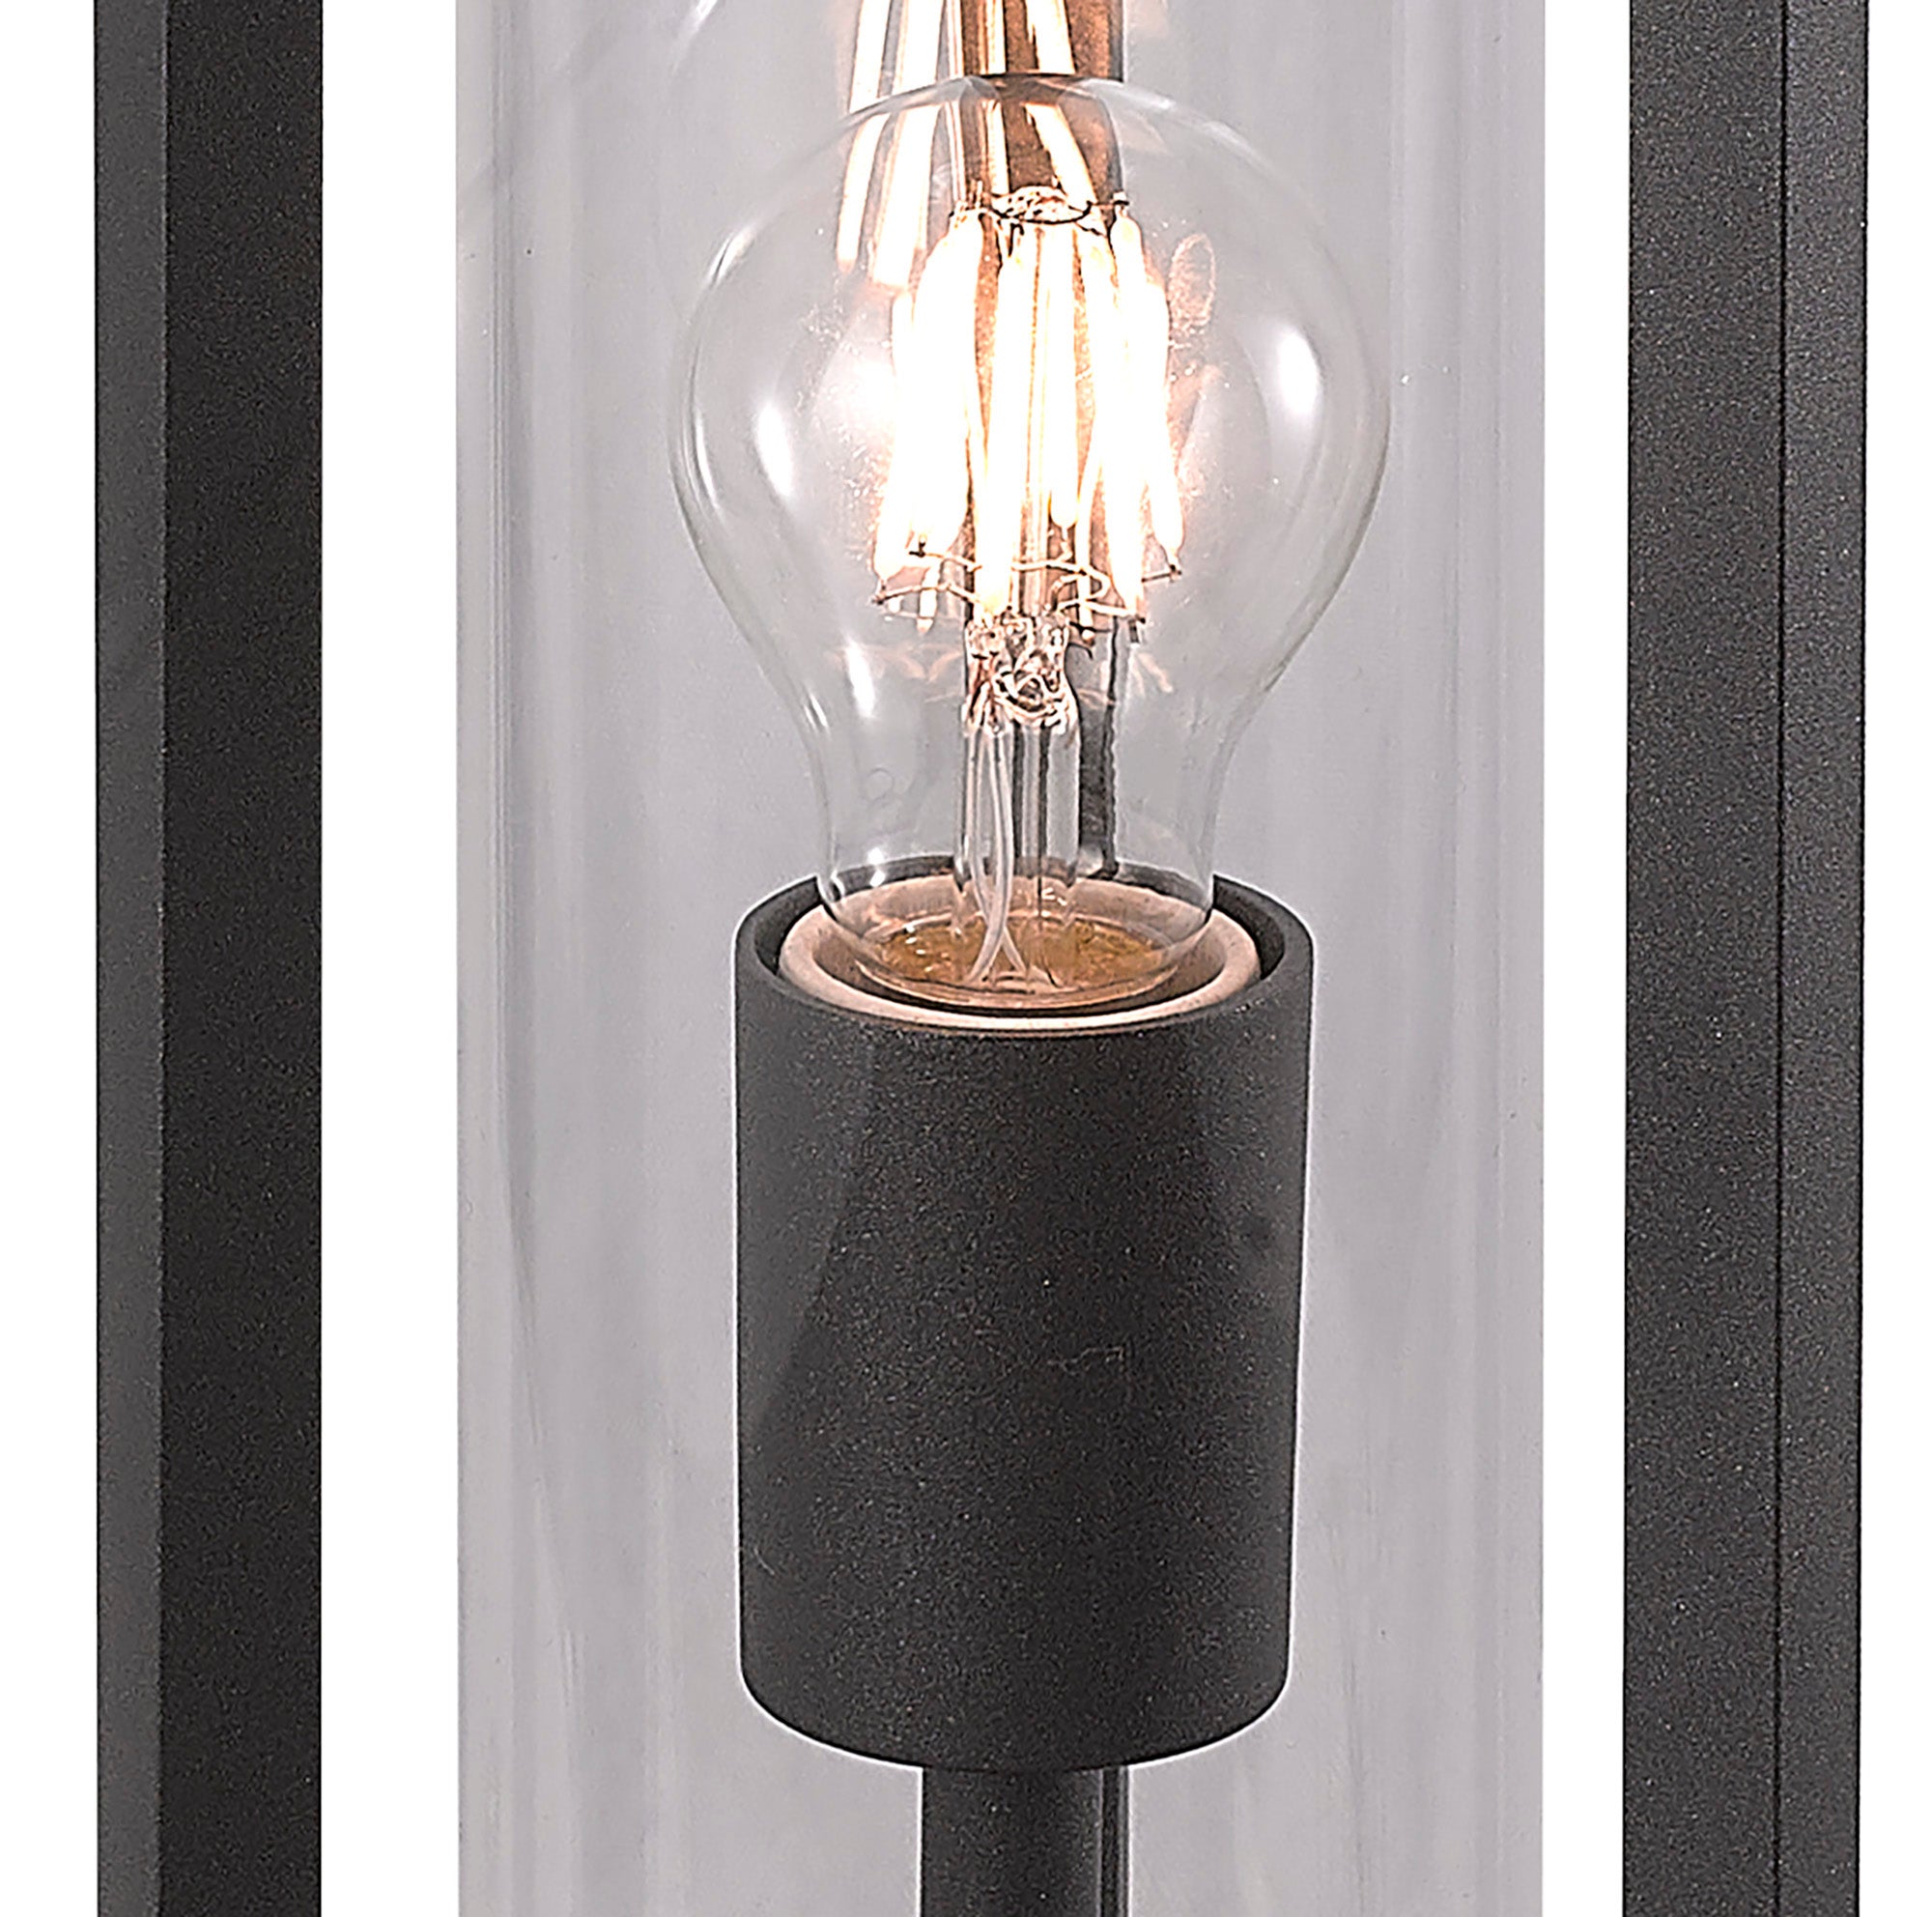 Manson Post Lamp Large, 1 x E27, IP65, Anthracite, 2yrs Warranty